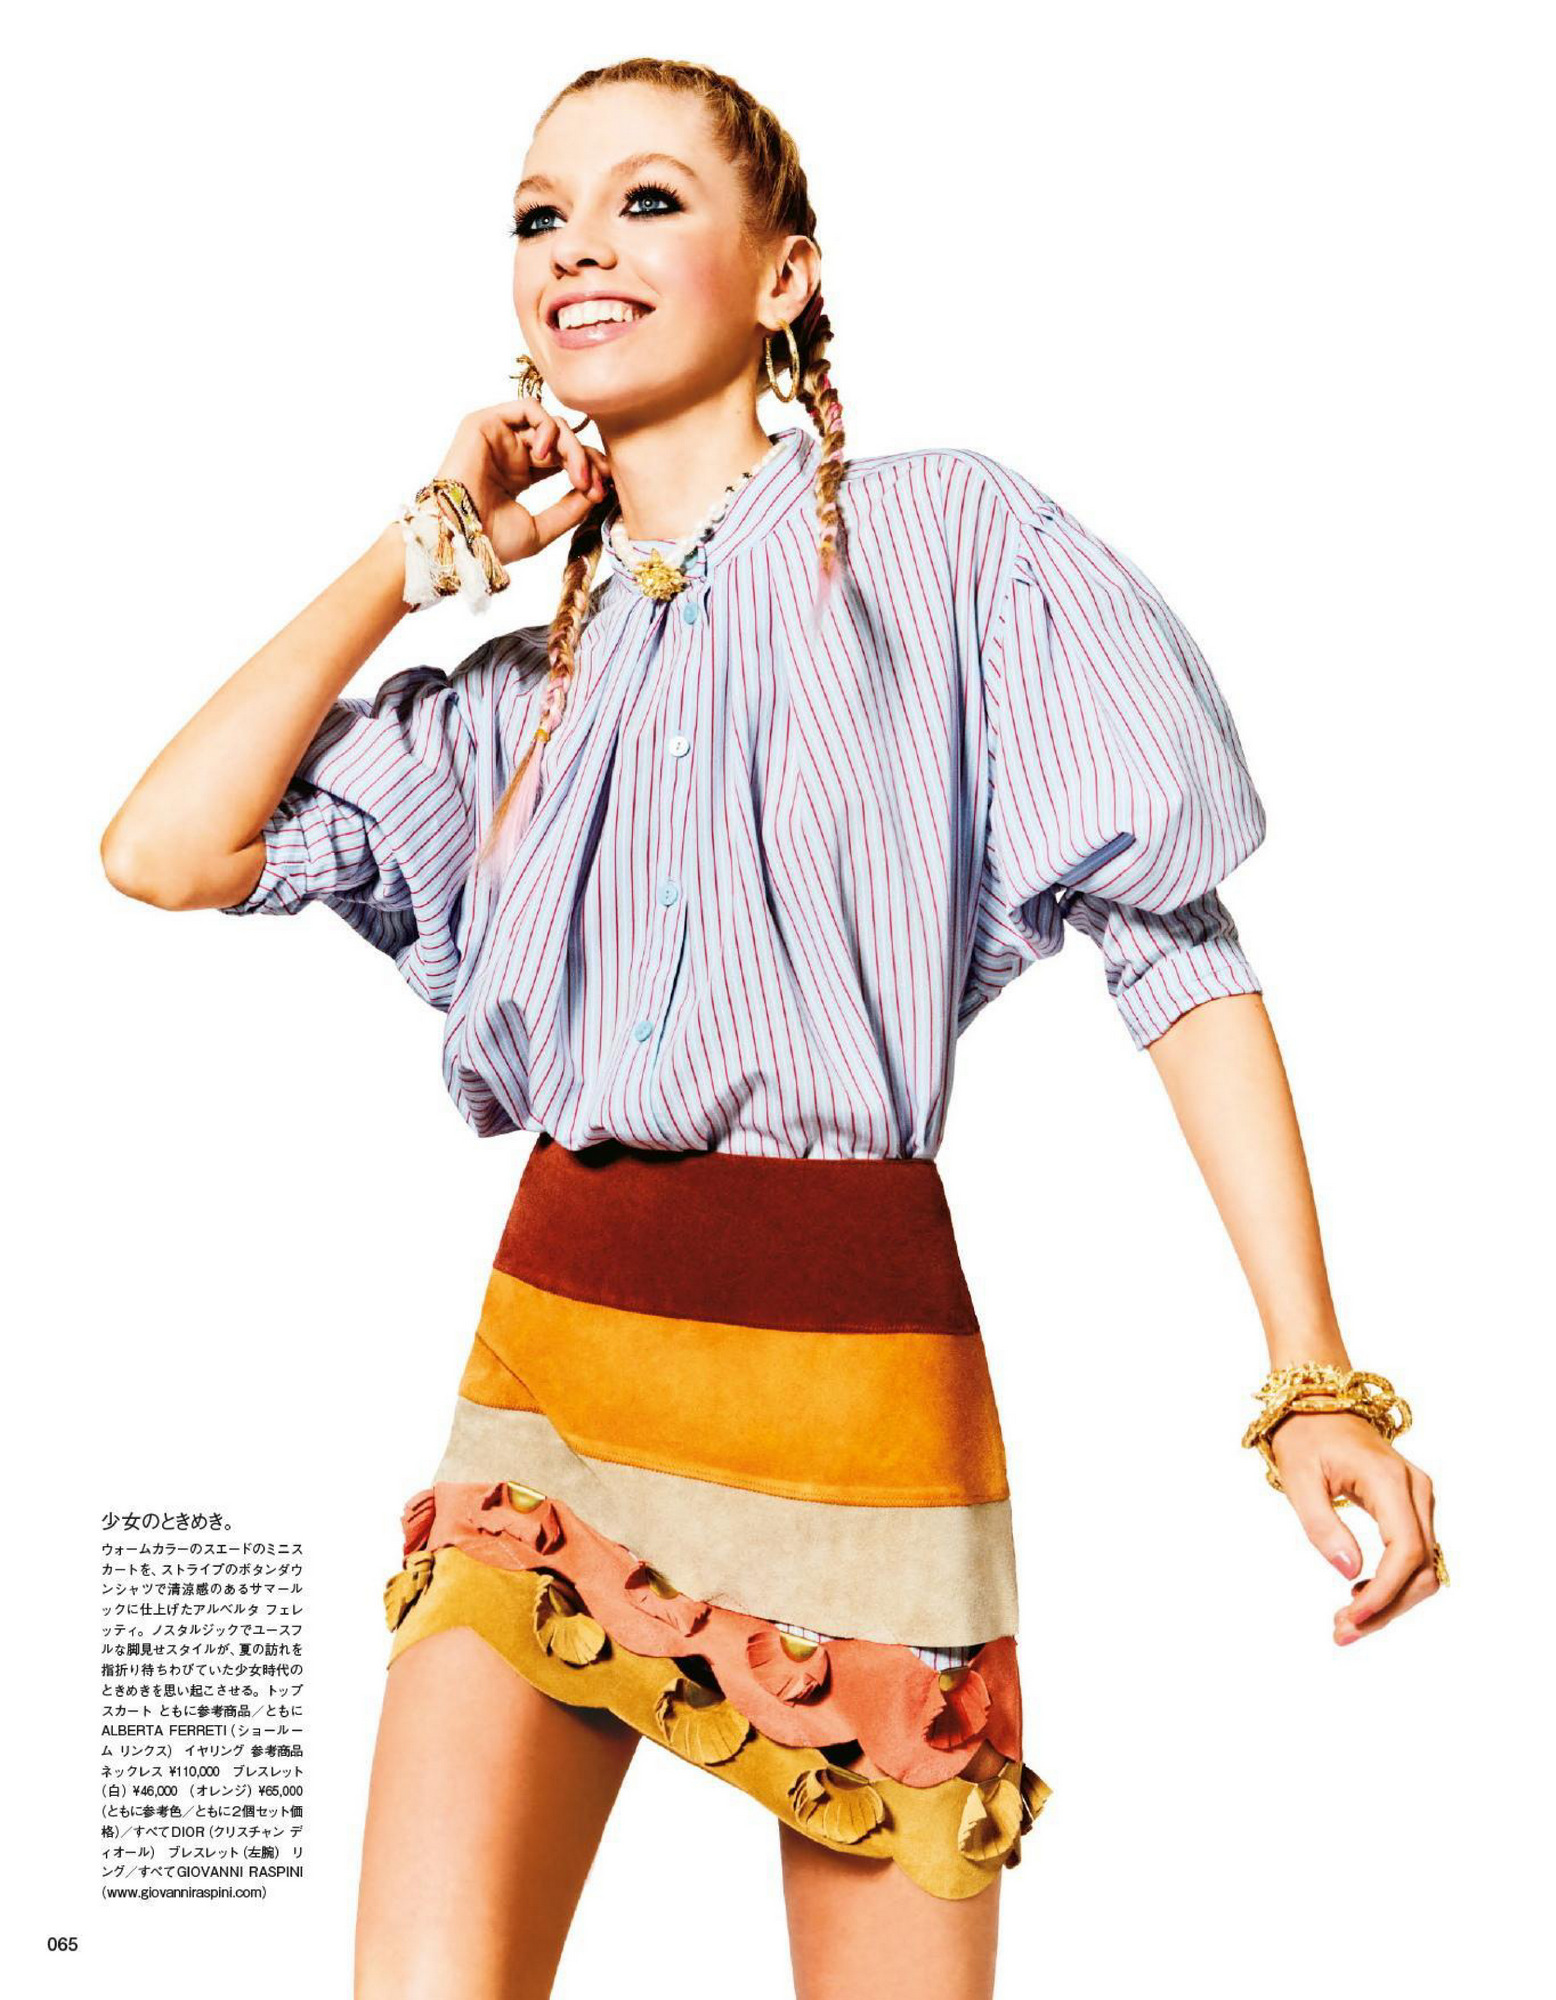 Stella Maxwell Beachin’ it For Vogue! - Photo 17